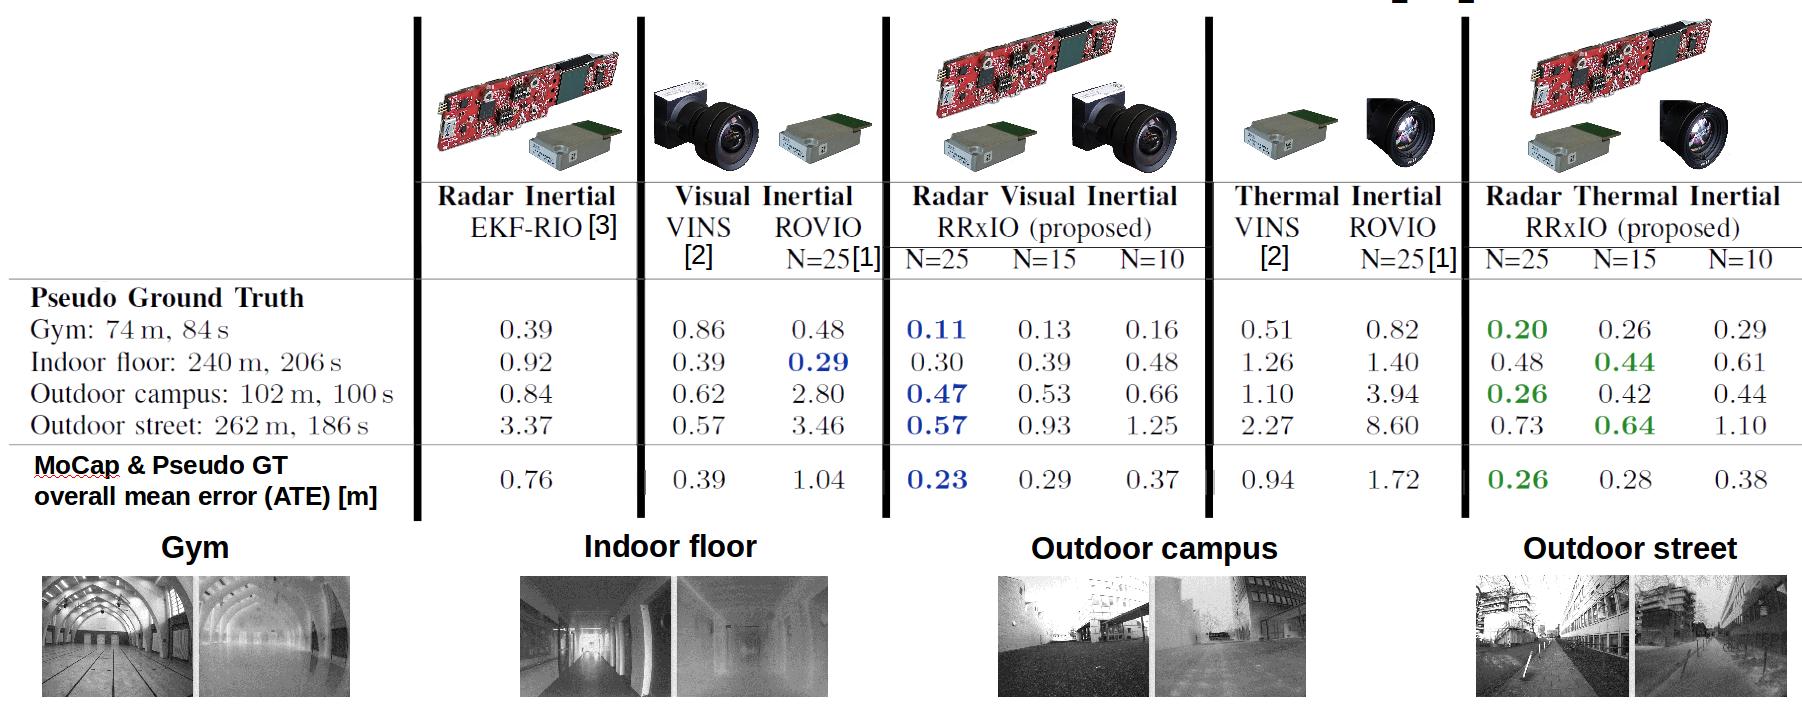 IRS Radar Thermal Visual Inertial Datasets IROS 2021 Christopher Doer